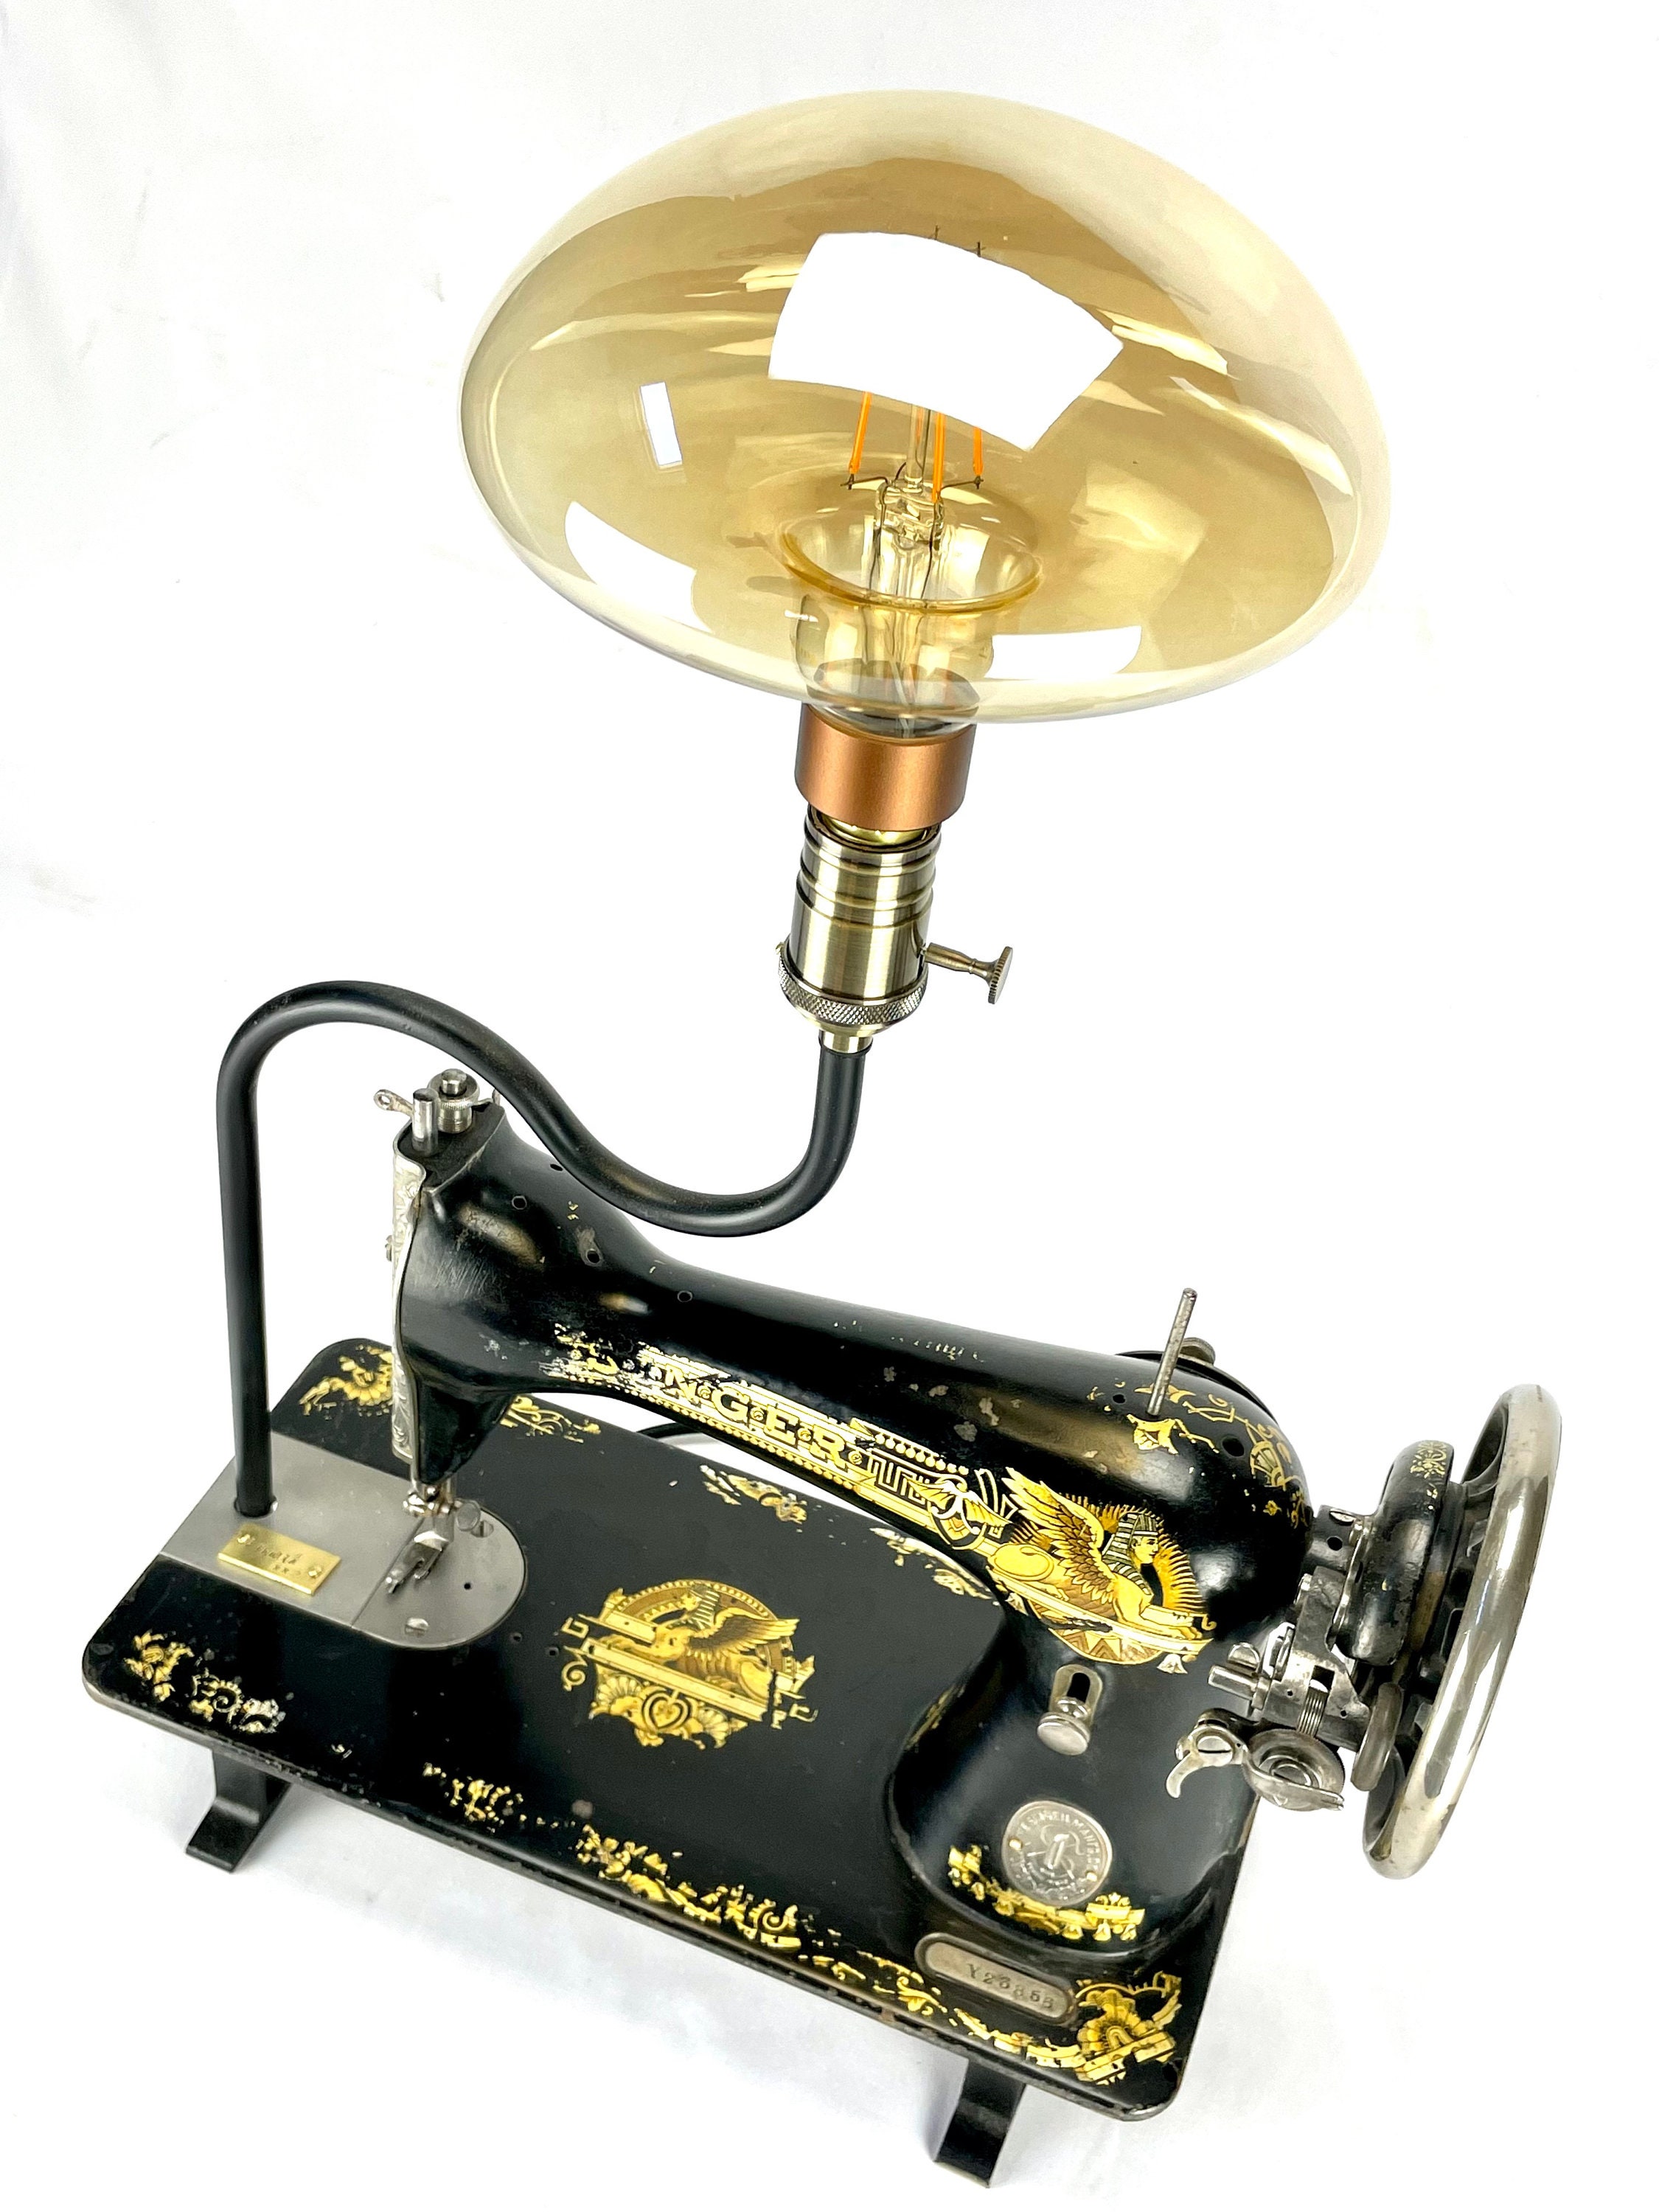 VINZZ Design - Máquina de coser Singer hecha lámpara. Con